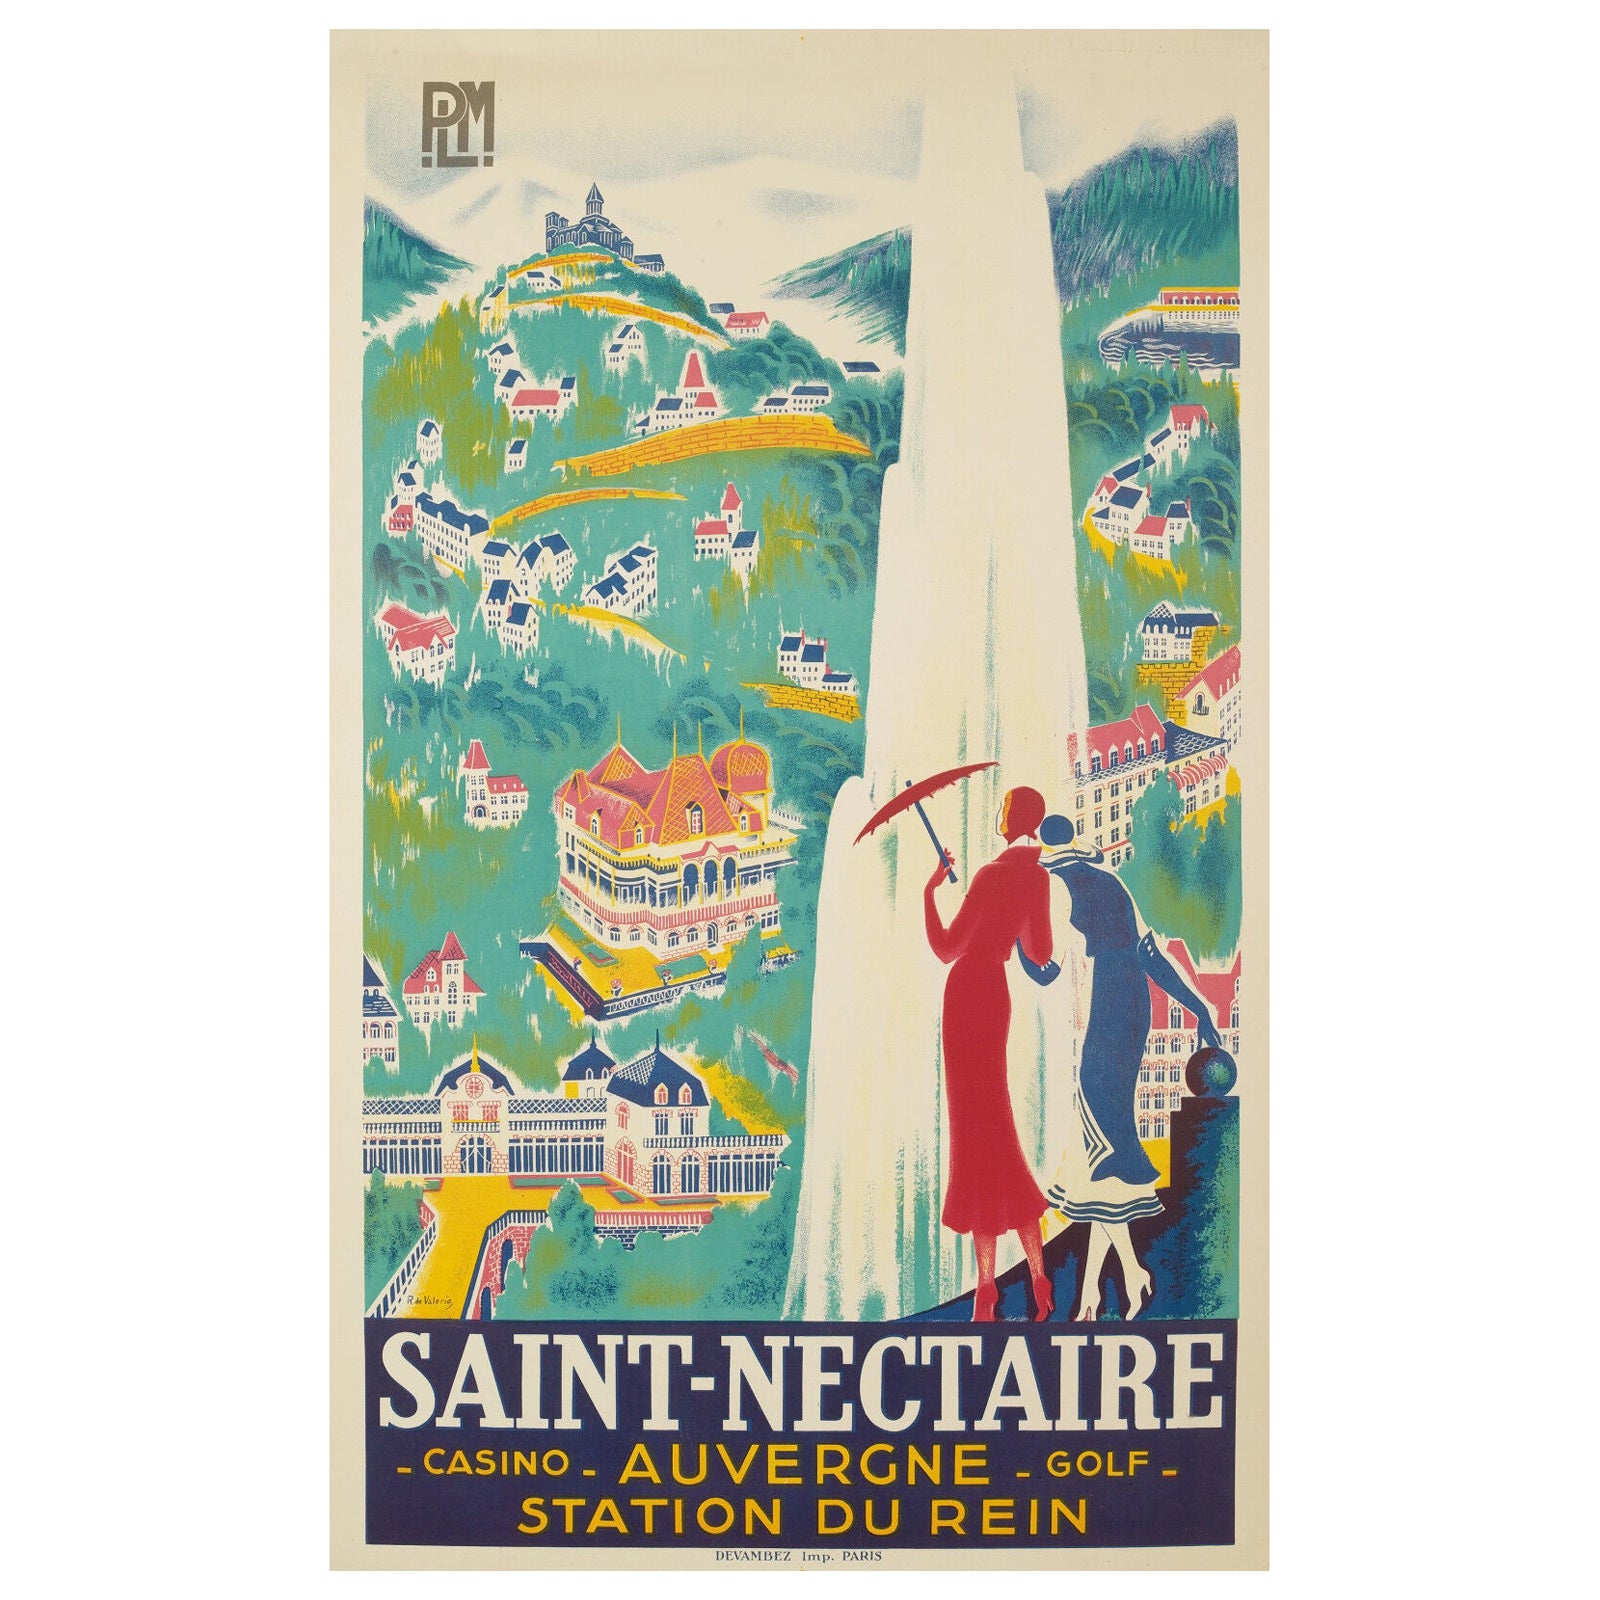 Roger Valerio, Original Vintage Golf Poster, Saint Nectaire Casino and Spa, 1930